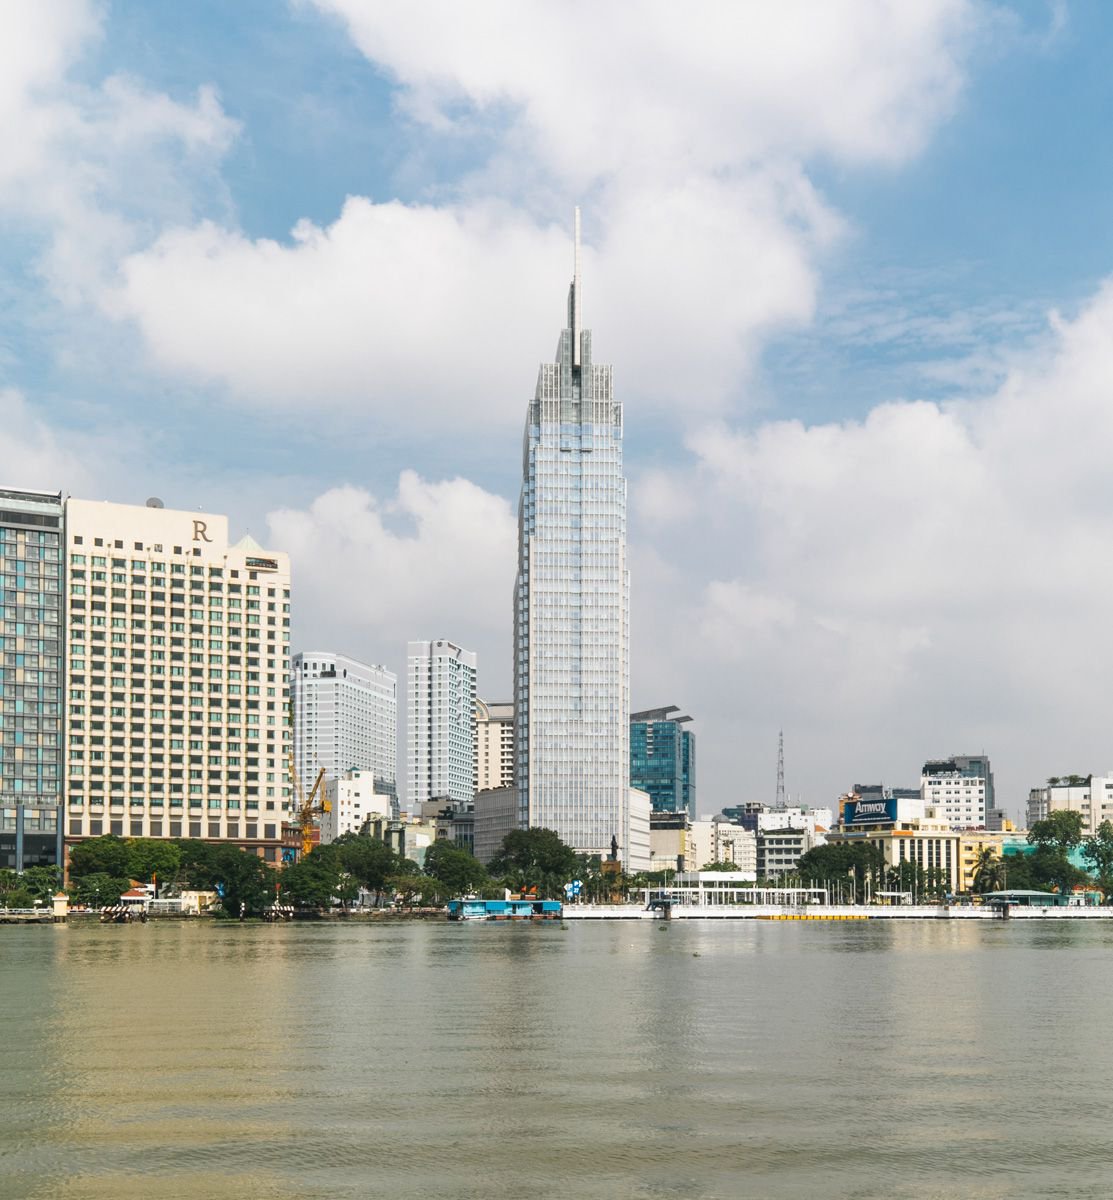 Image of VIETCOMBANK TOWER, Vietnam